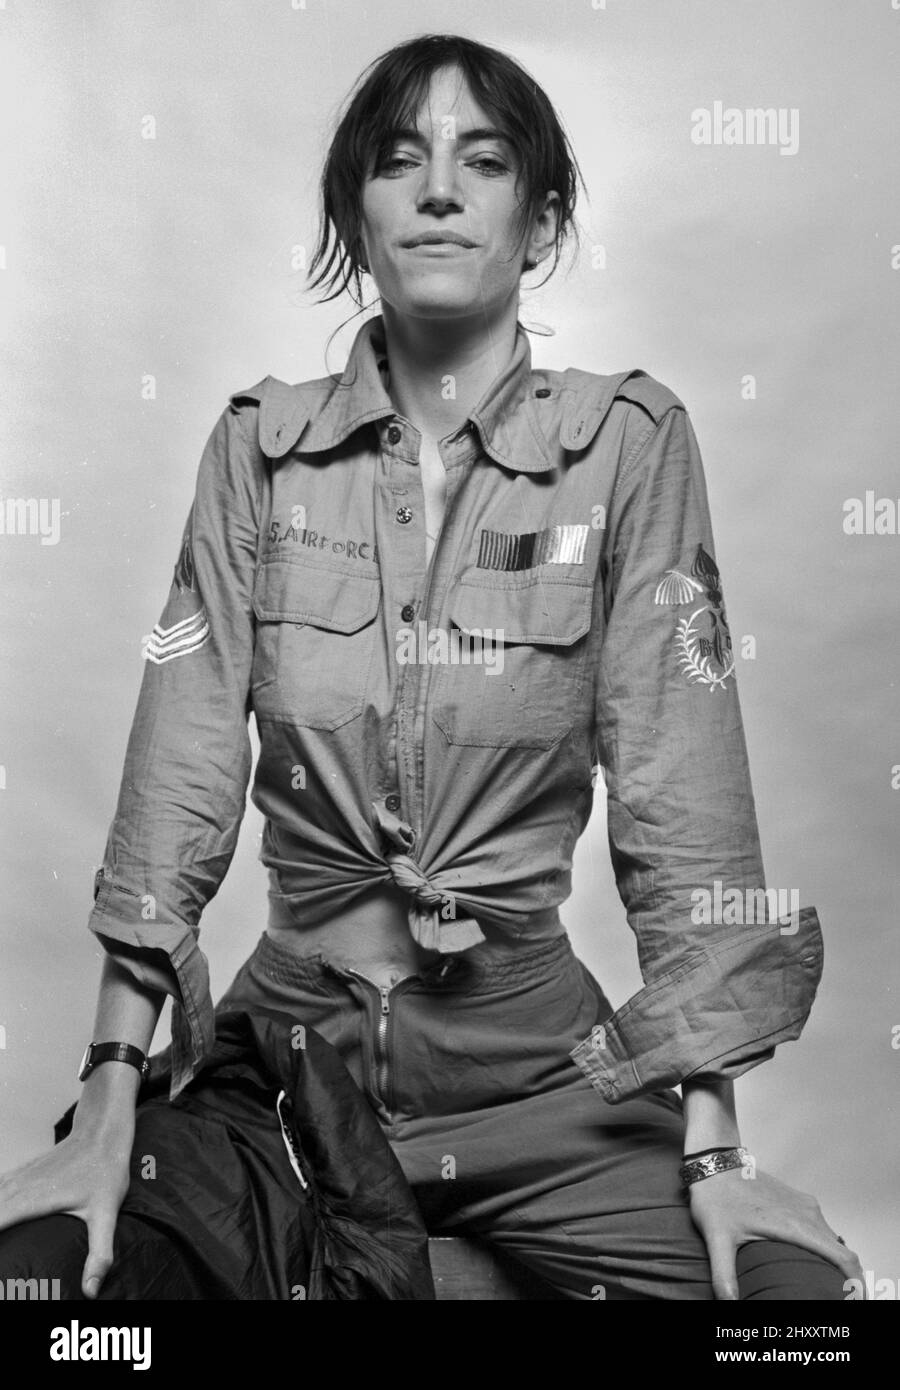 Patti Smith photohoot, estudio Berenstraat, Amsterdam Foto de stock